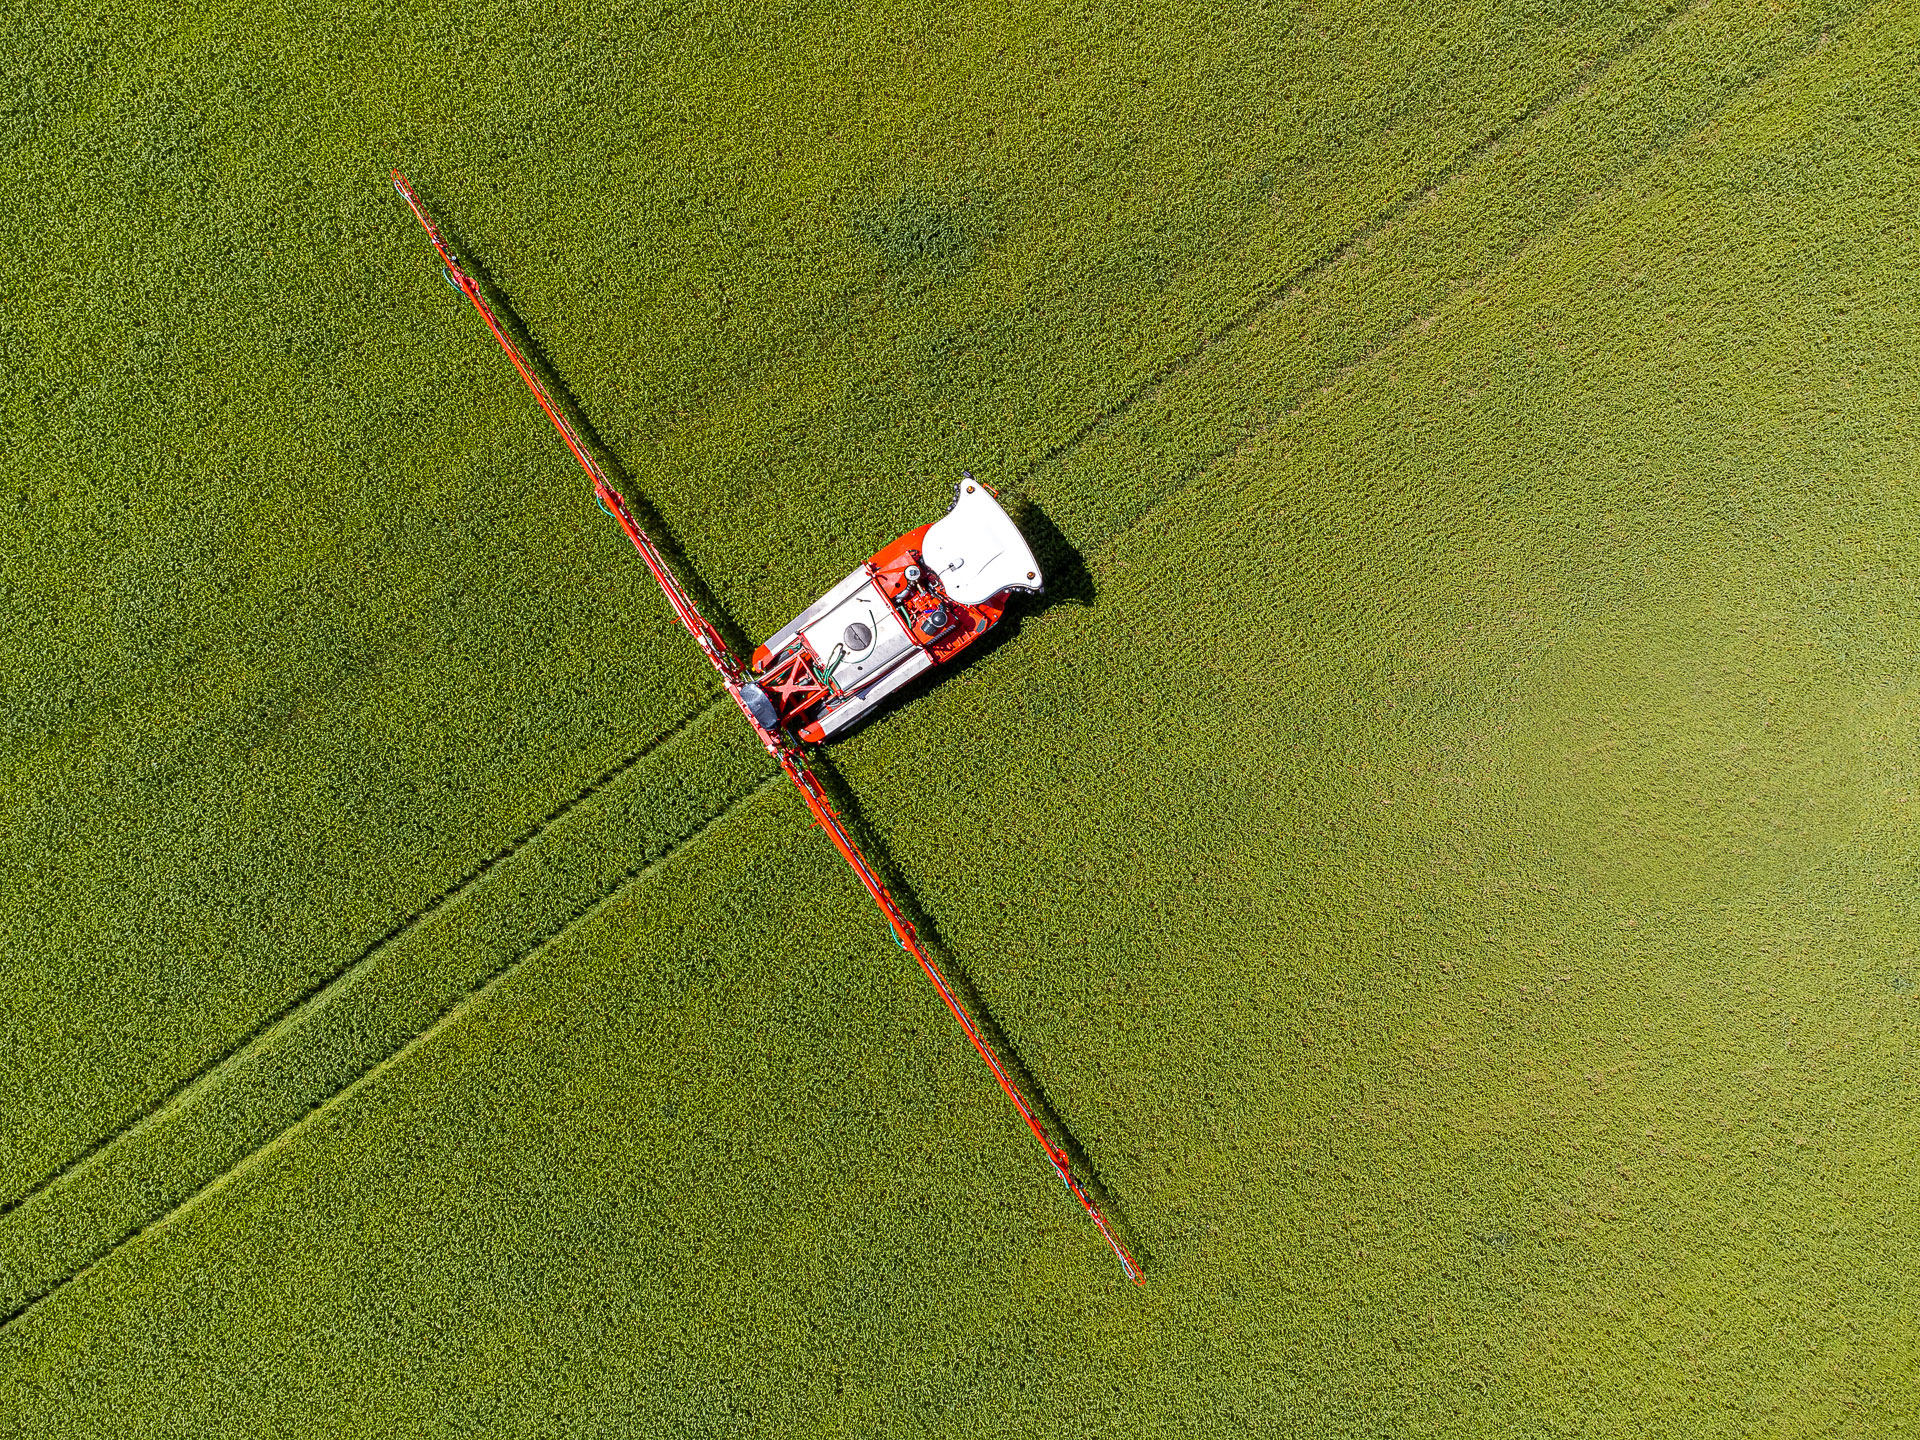 Bateman Sprayer in the field seen from above